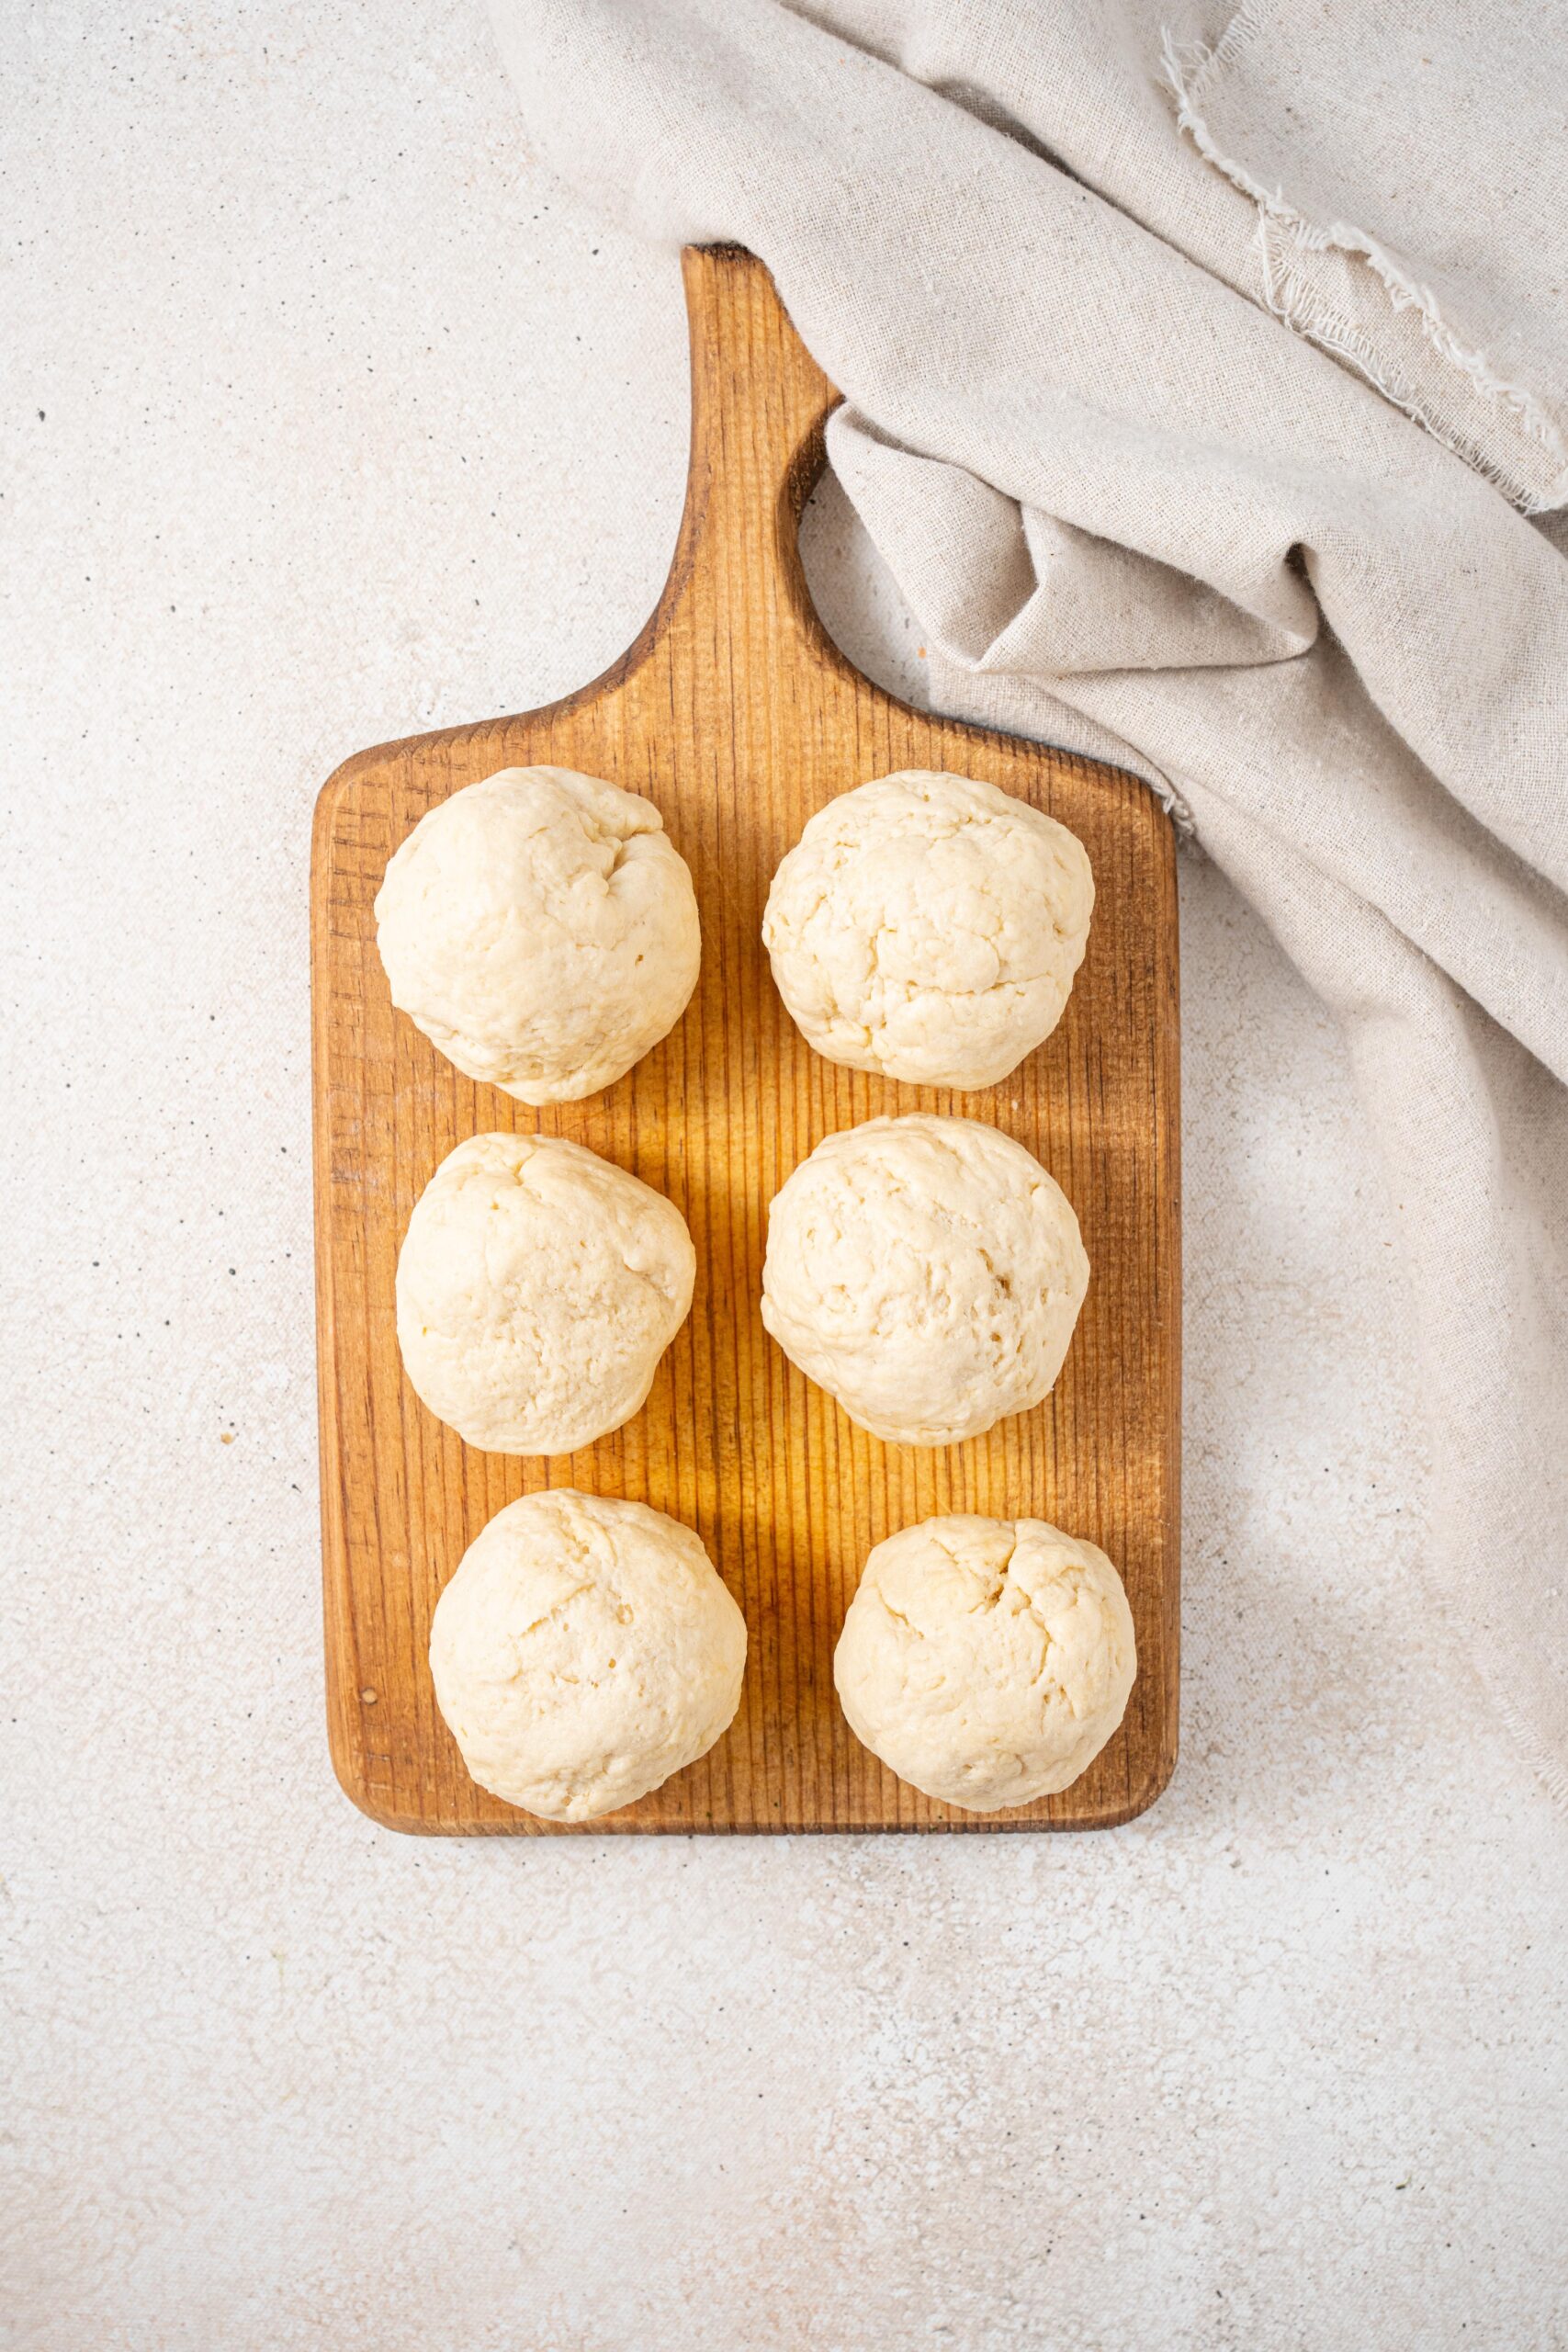 high protein flatbread dough split into six balls